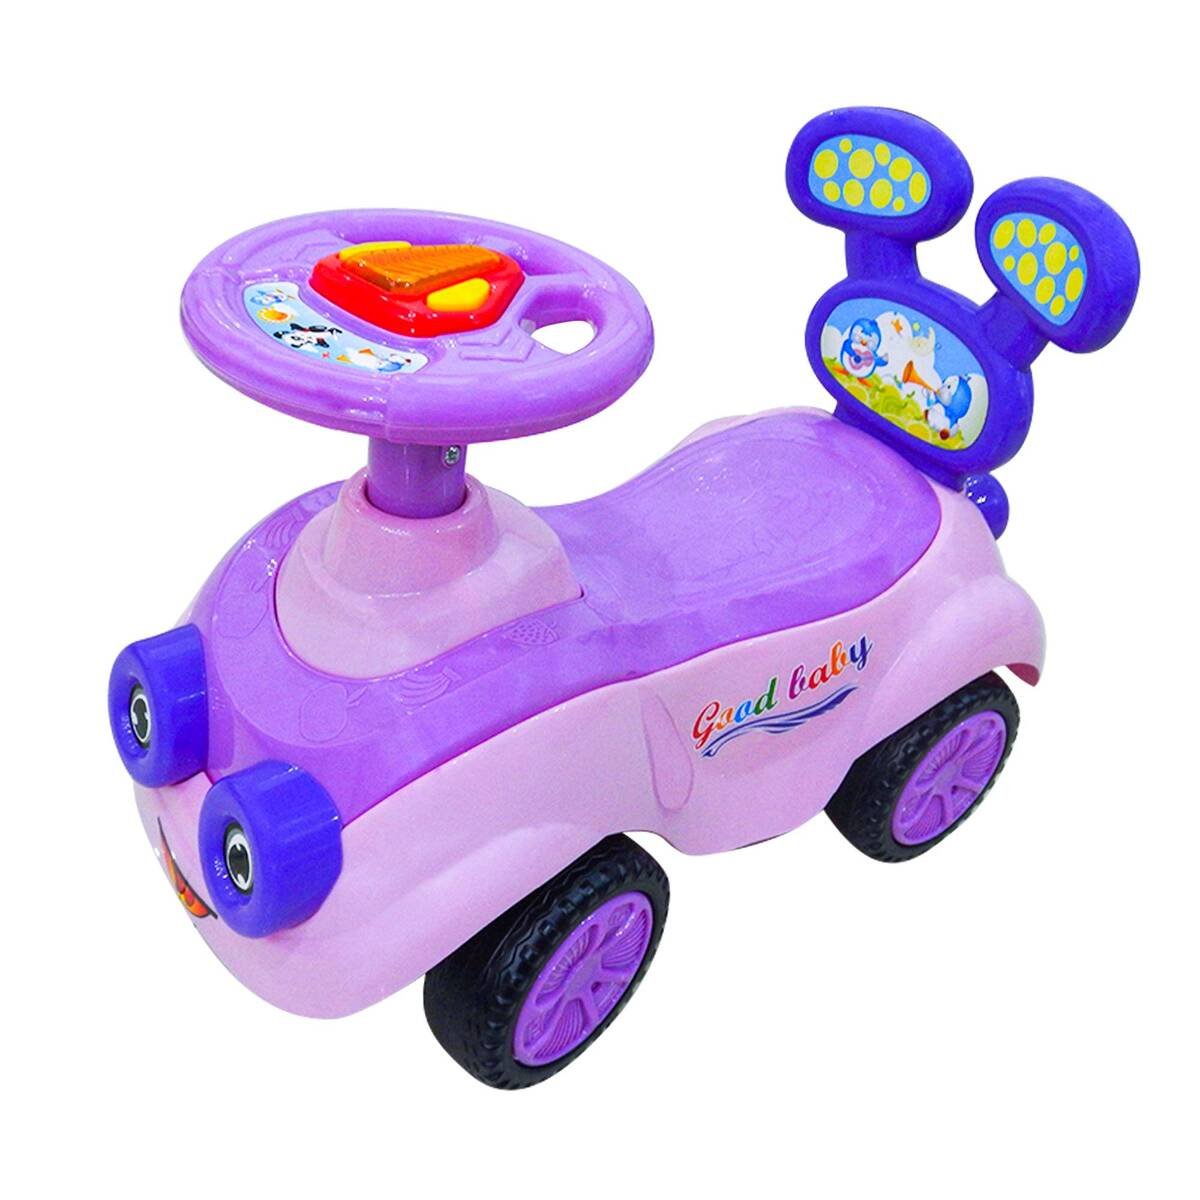 Skid Fusion Ride On Car Q01-2 Violet